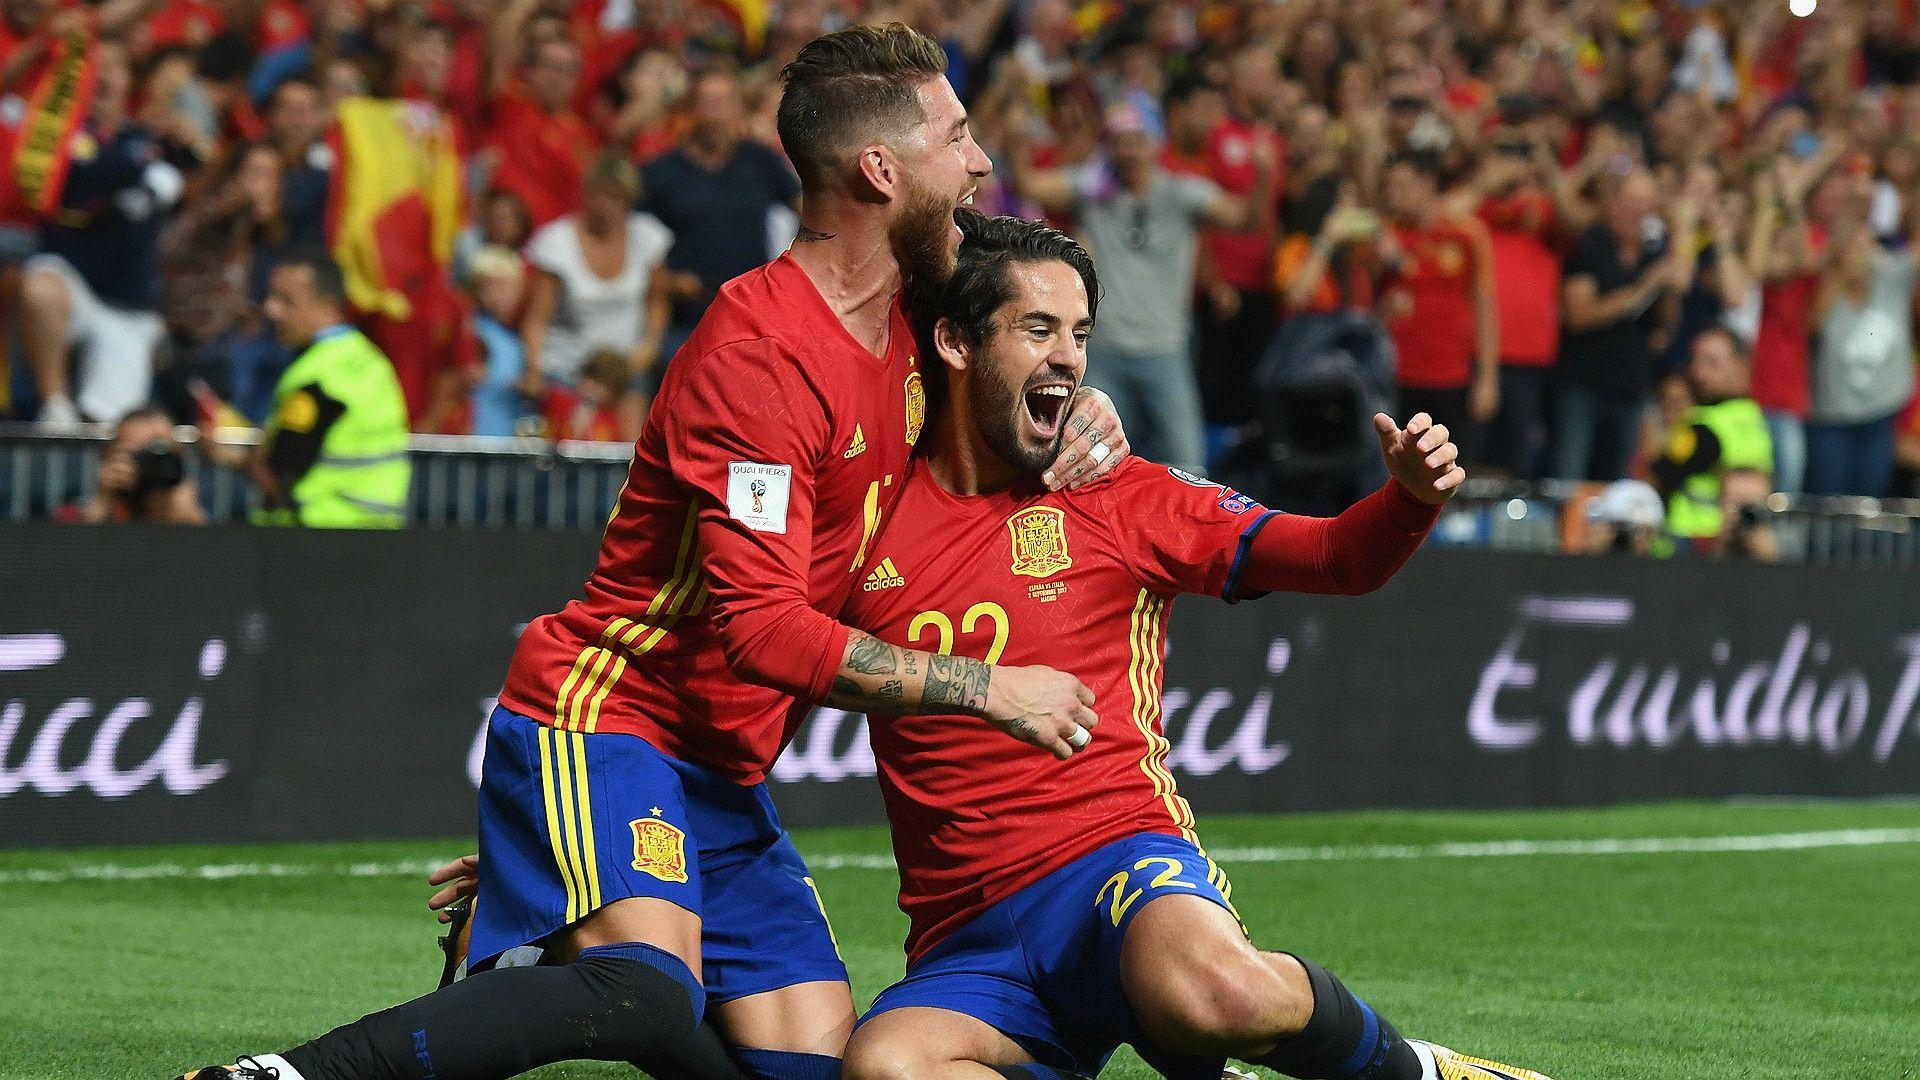 Spain National Team Wallpaper